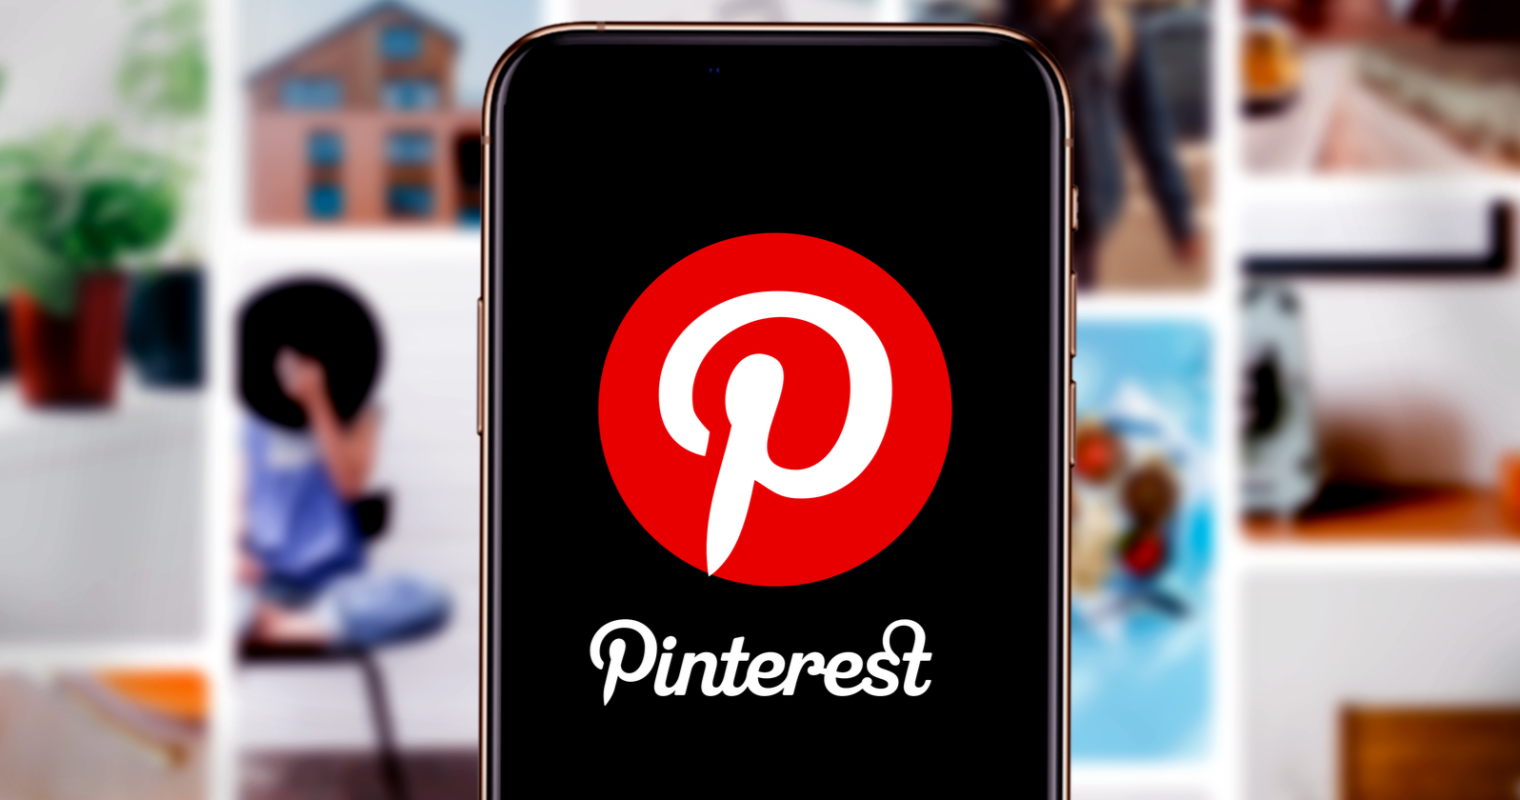 Pinterest TV Studio’ App: How Will It Wok Out For Pinterest?